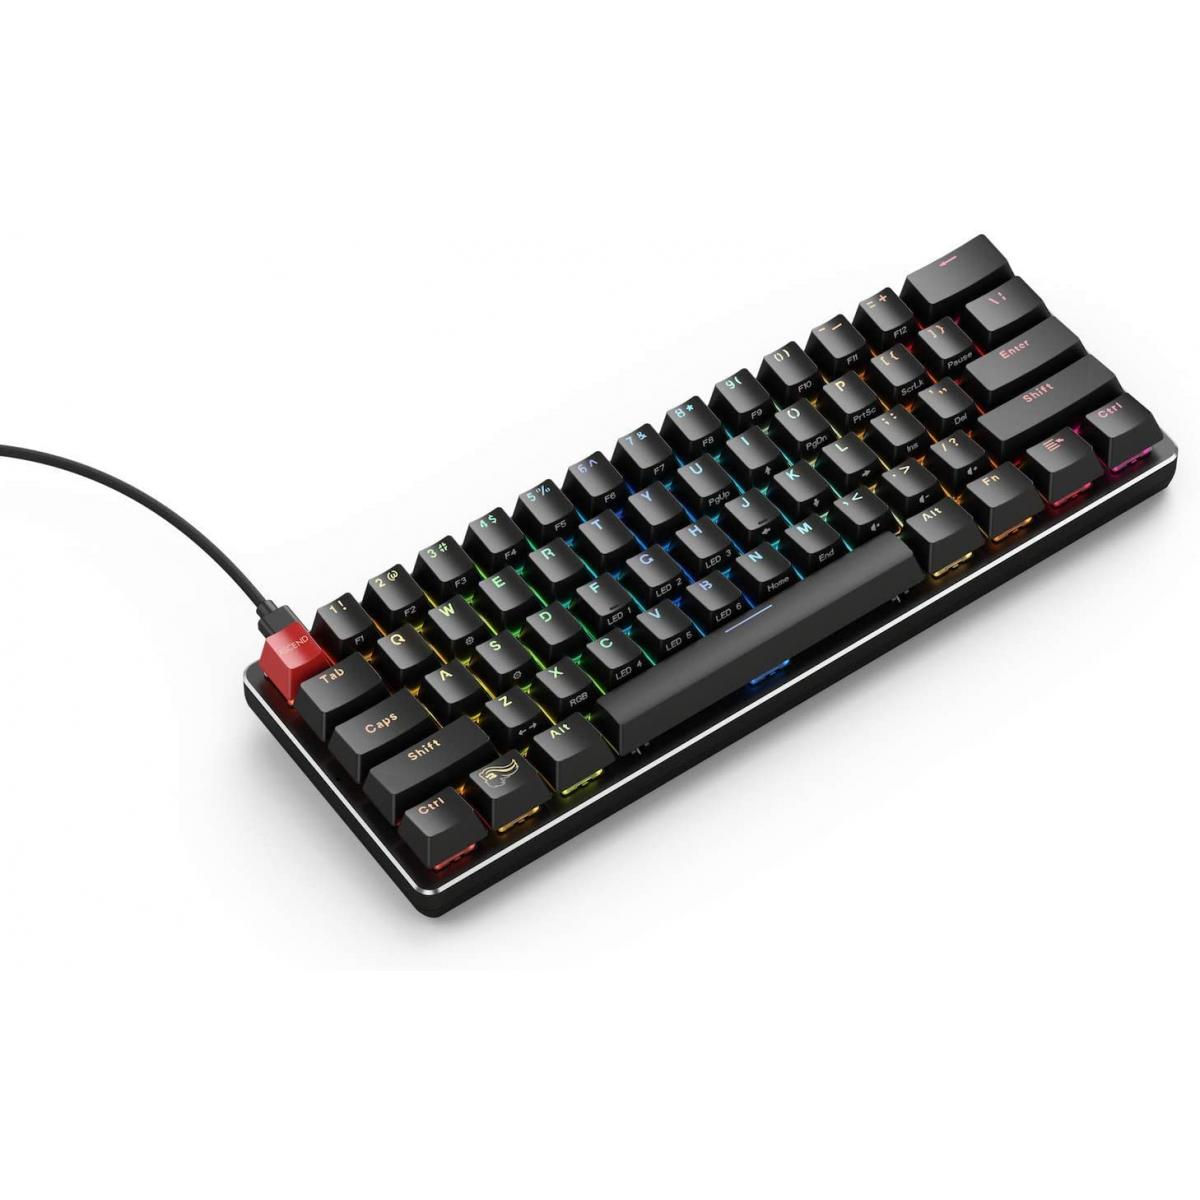 GLORIOUS GMMK COMPACT Mechanical Gaming Keyboard (BLACK/SILVER) 60%